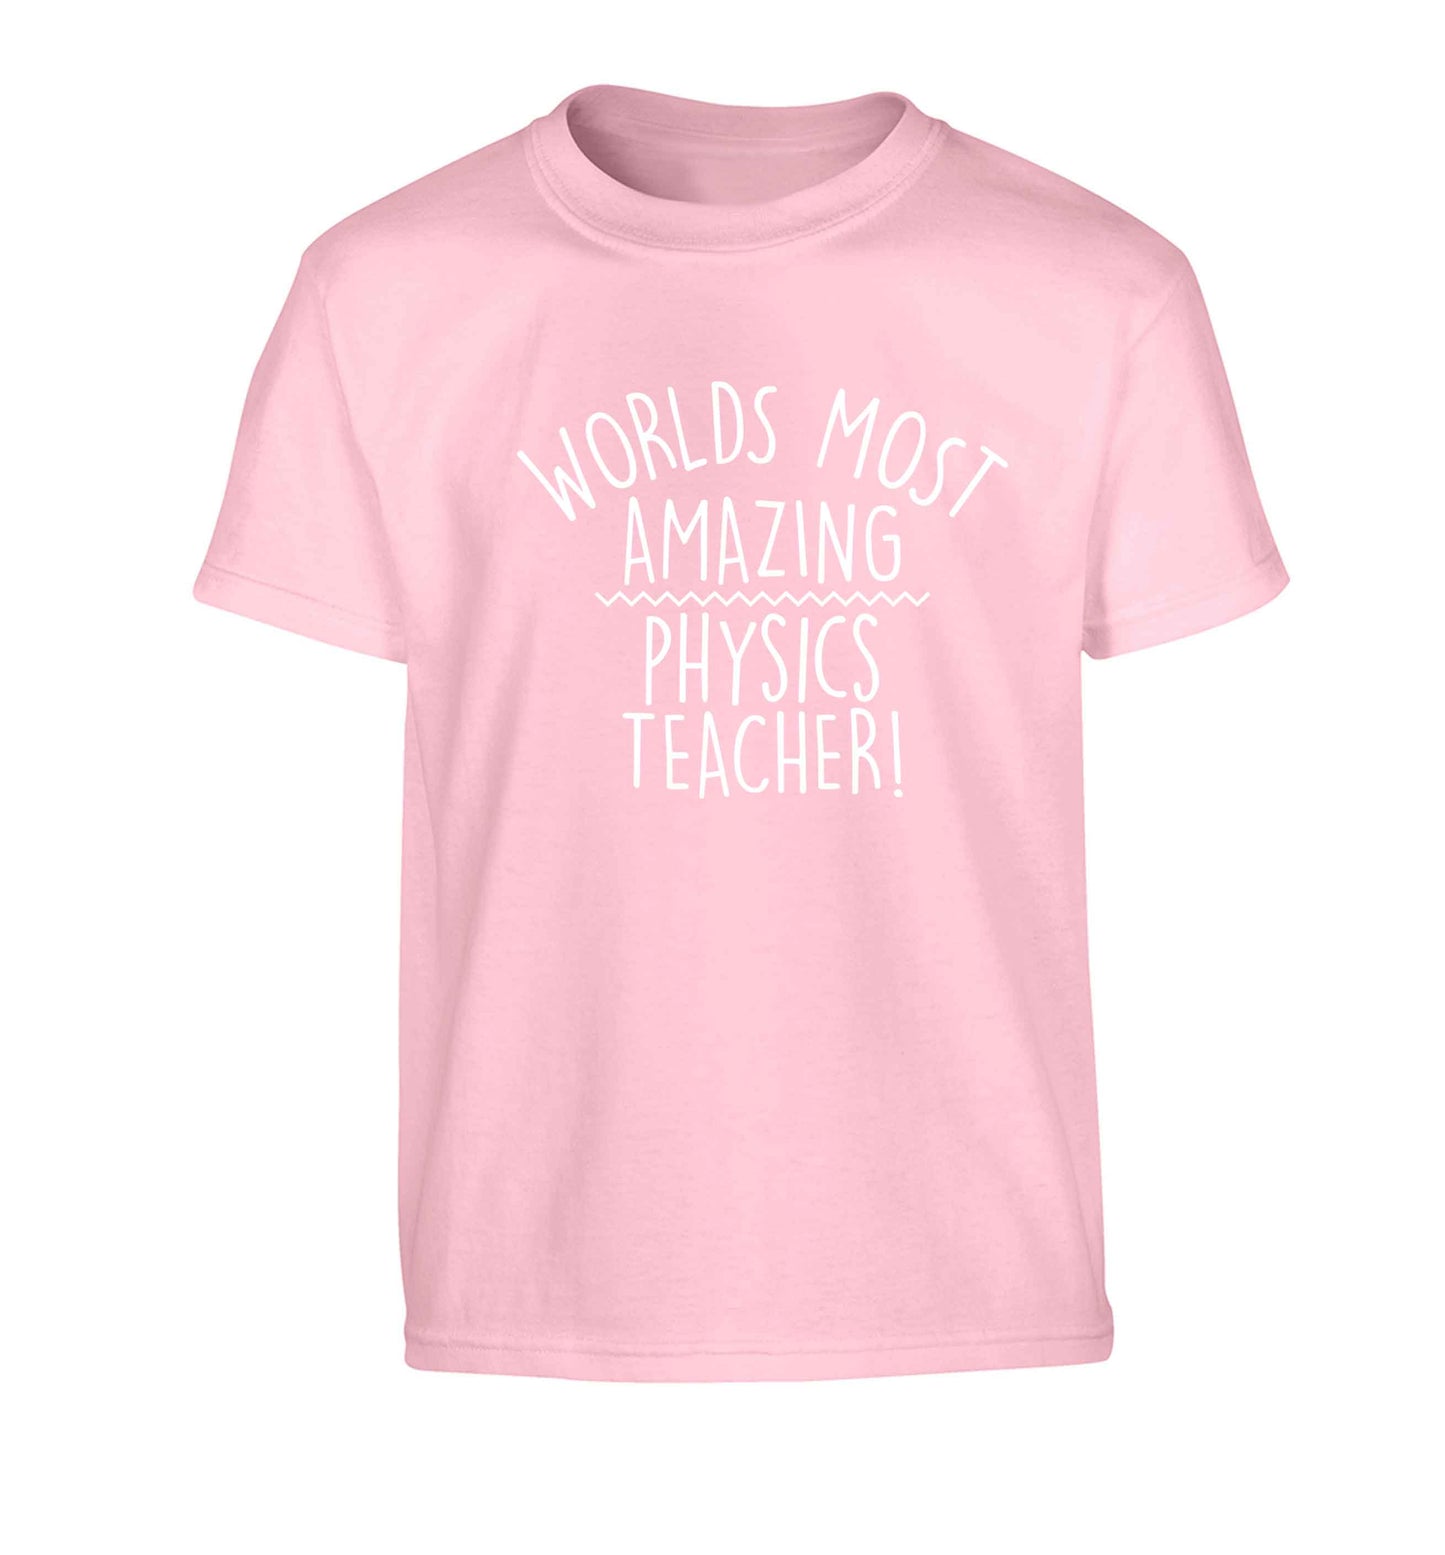 Worlds most amazing physics teacher Children's light pink Tshirt 12-13 Years